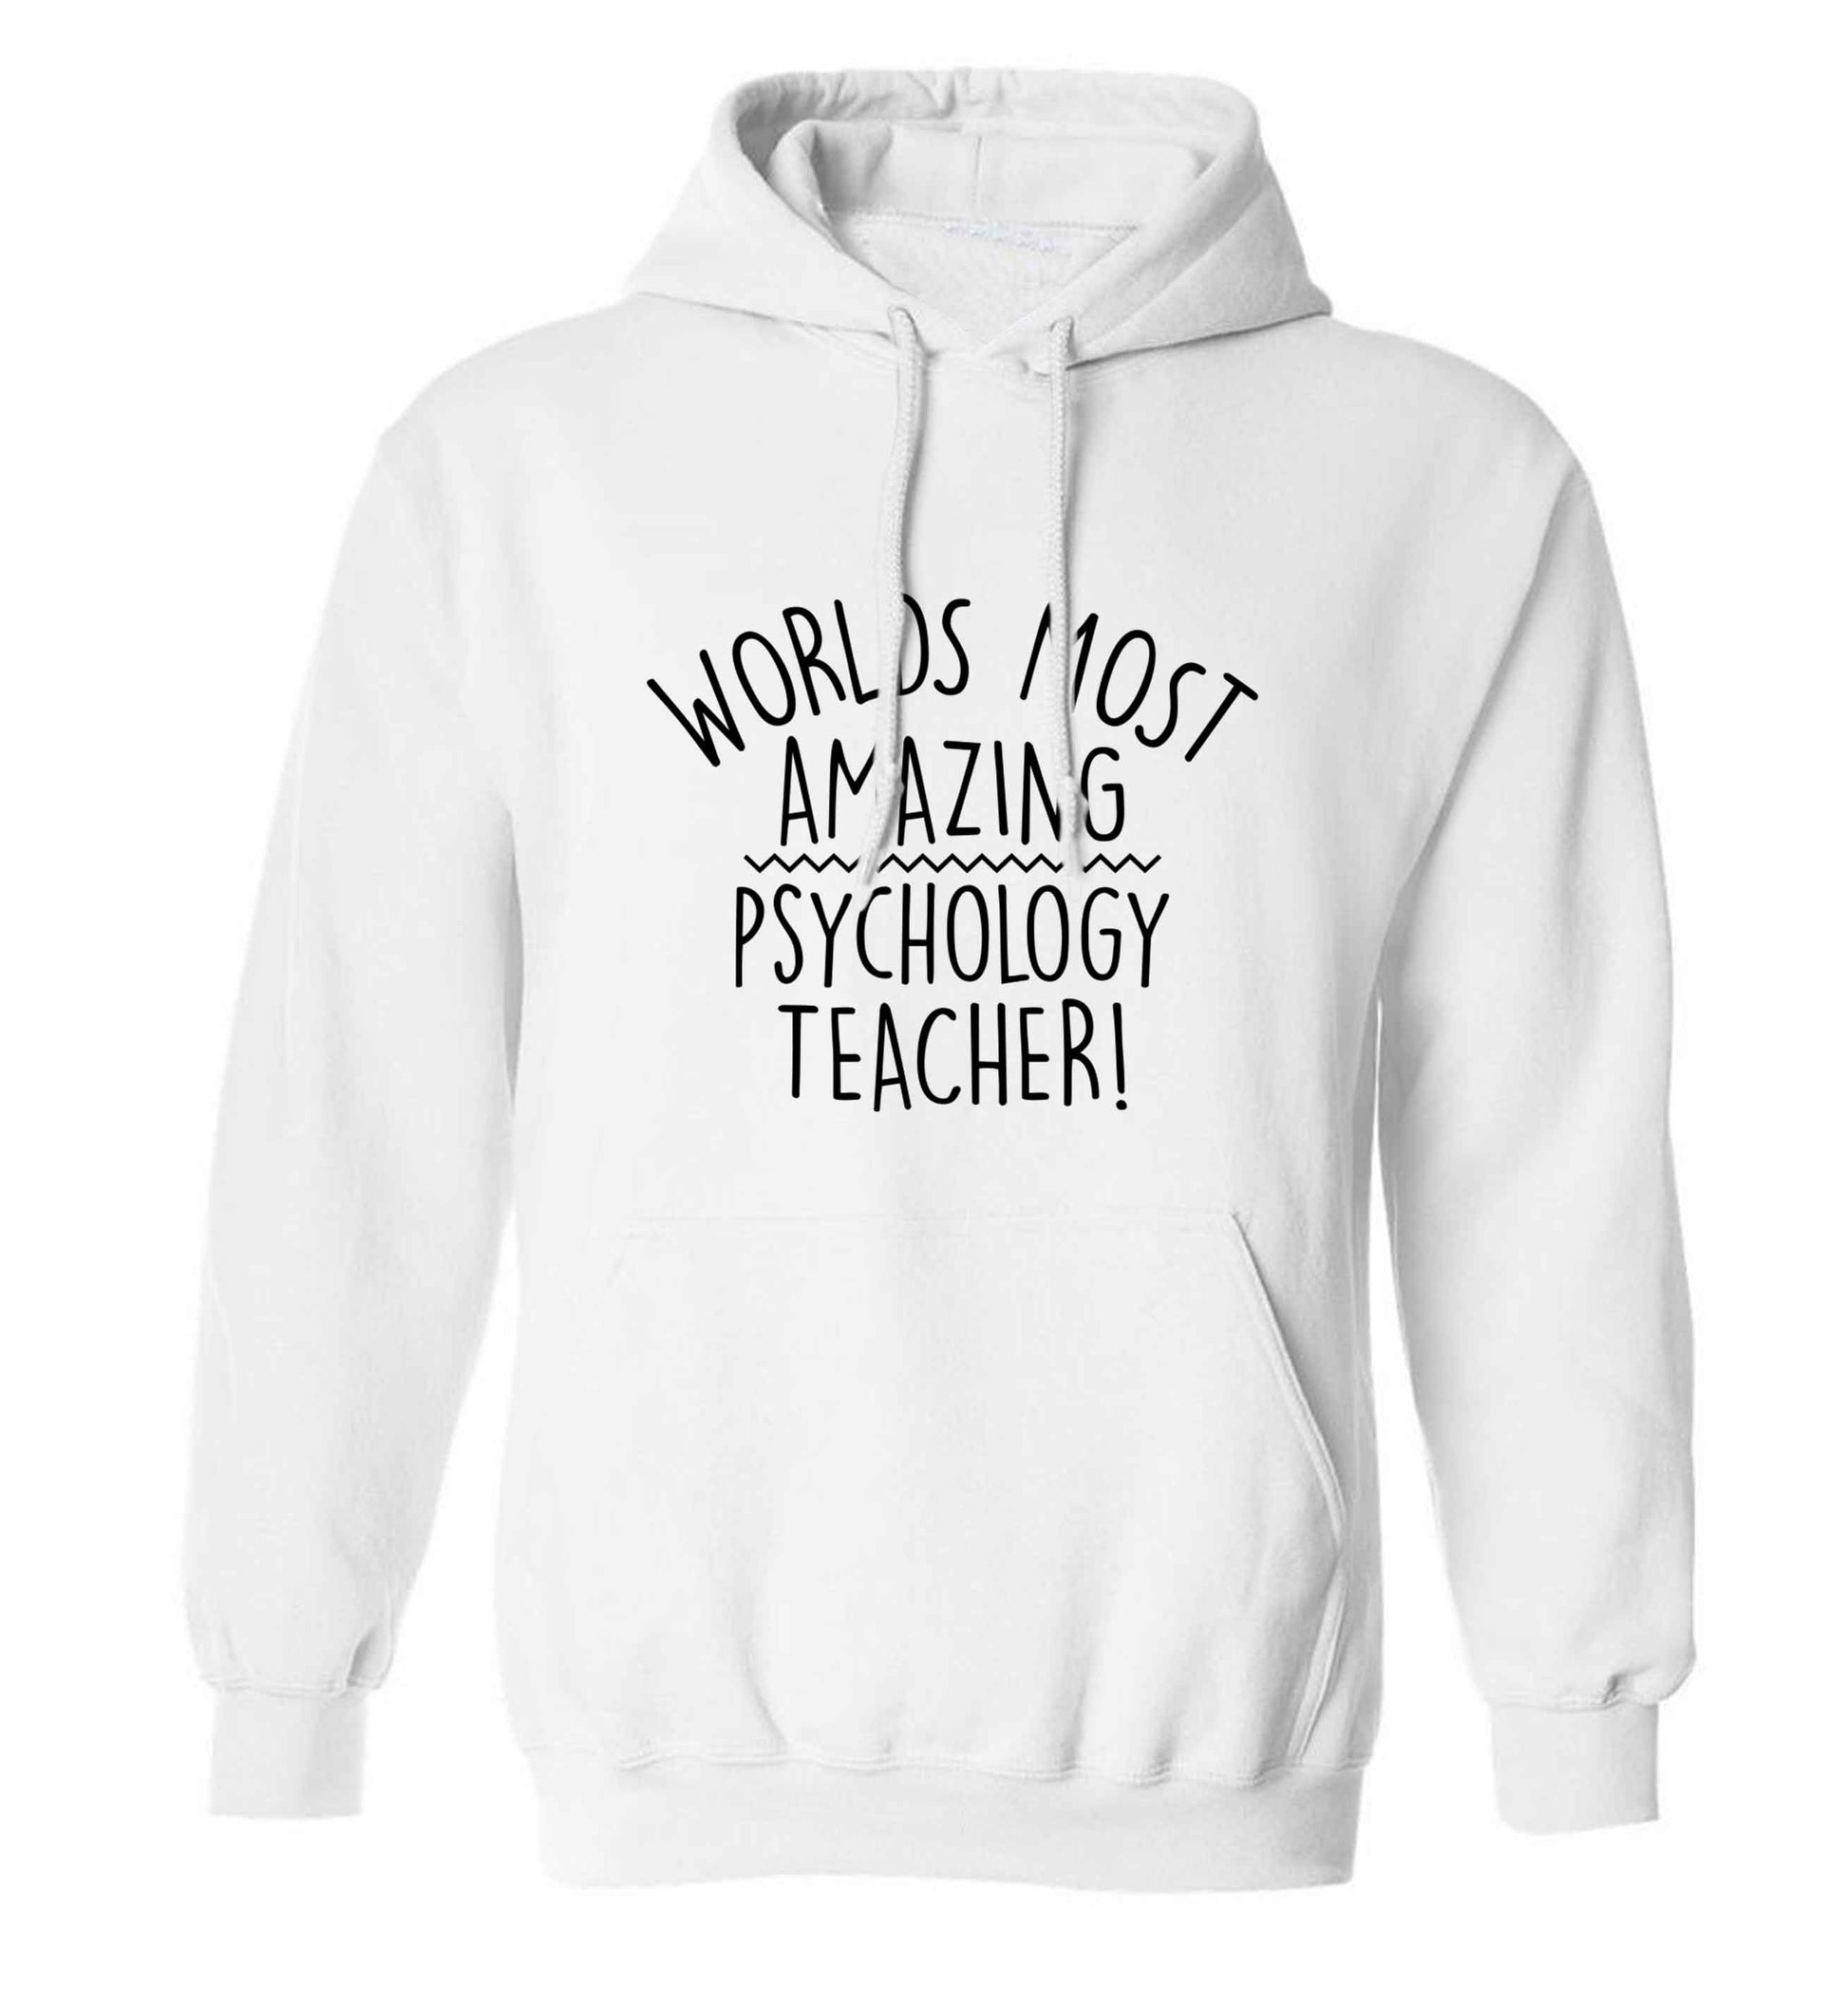 Worlds most amazing psychology teacher adults unisex white hoodie 2XL